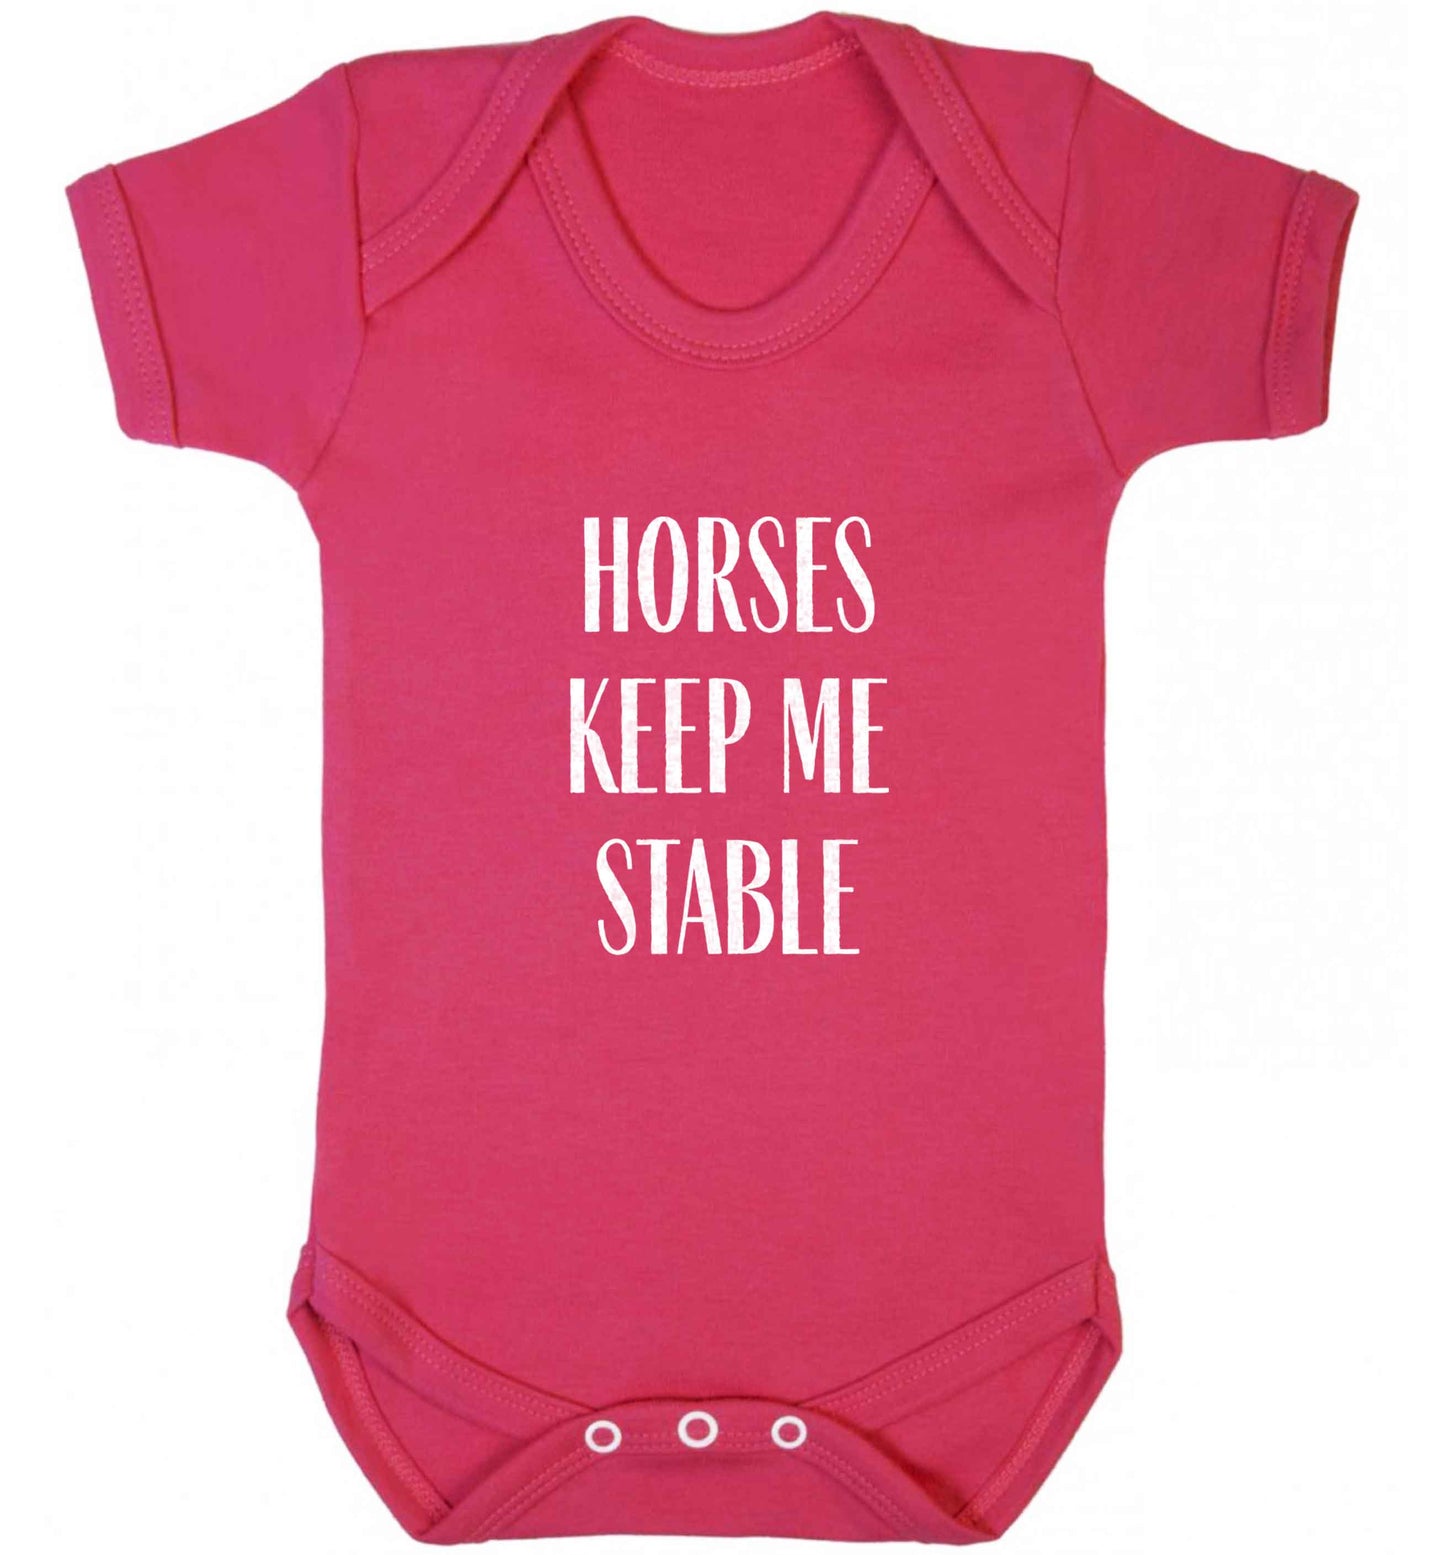 Horses keep me stable baby vest dark pink 18-24 months